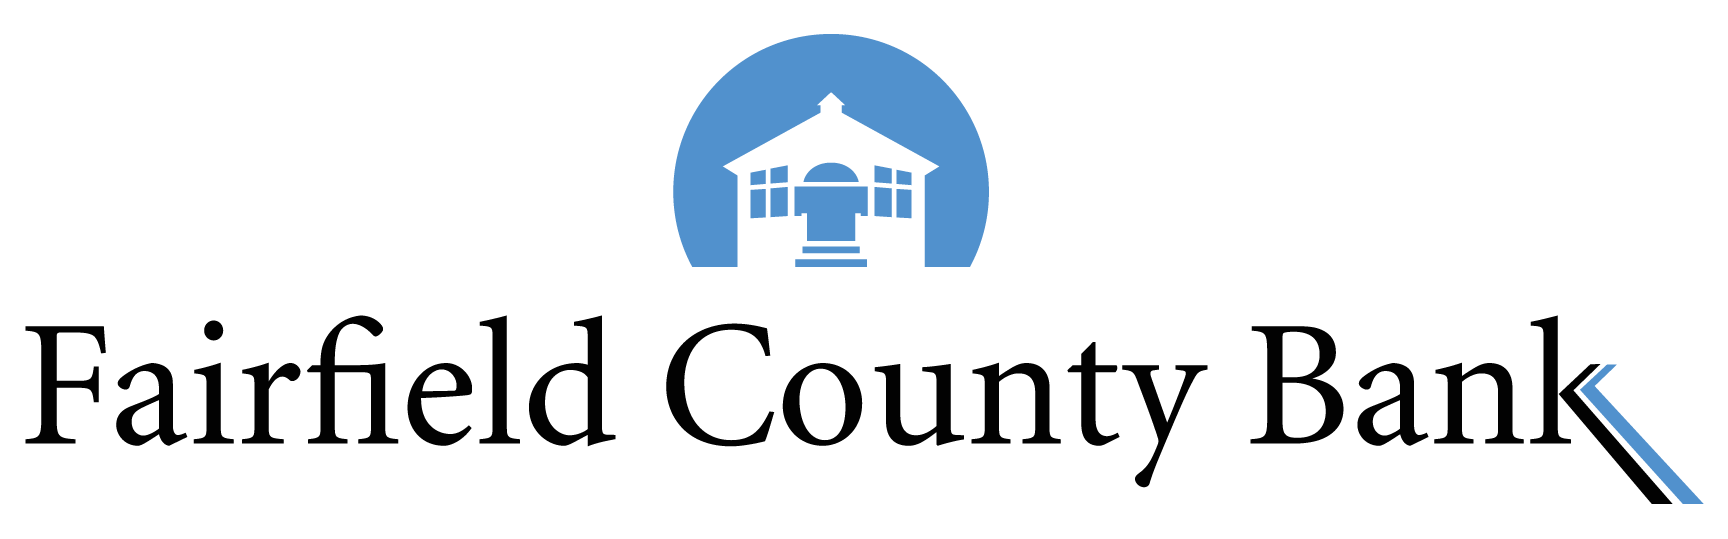 Fairfield County Bank logo